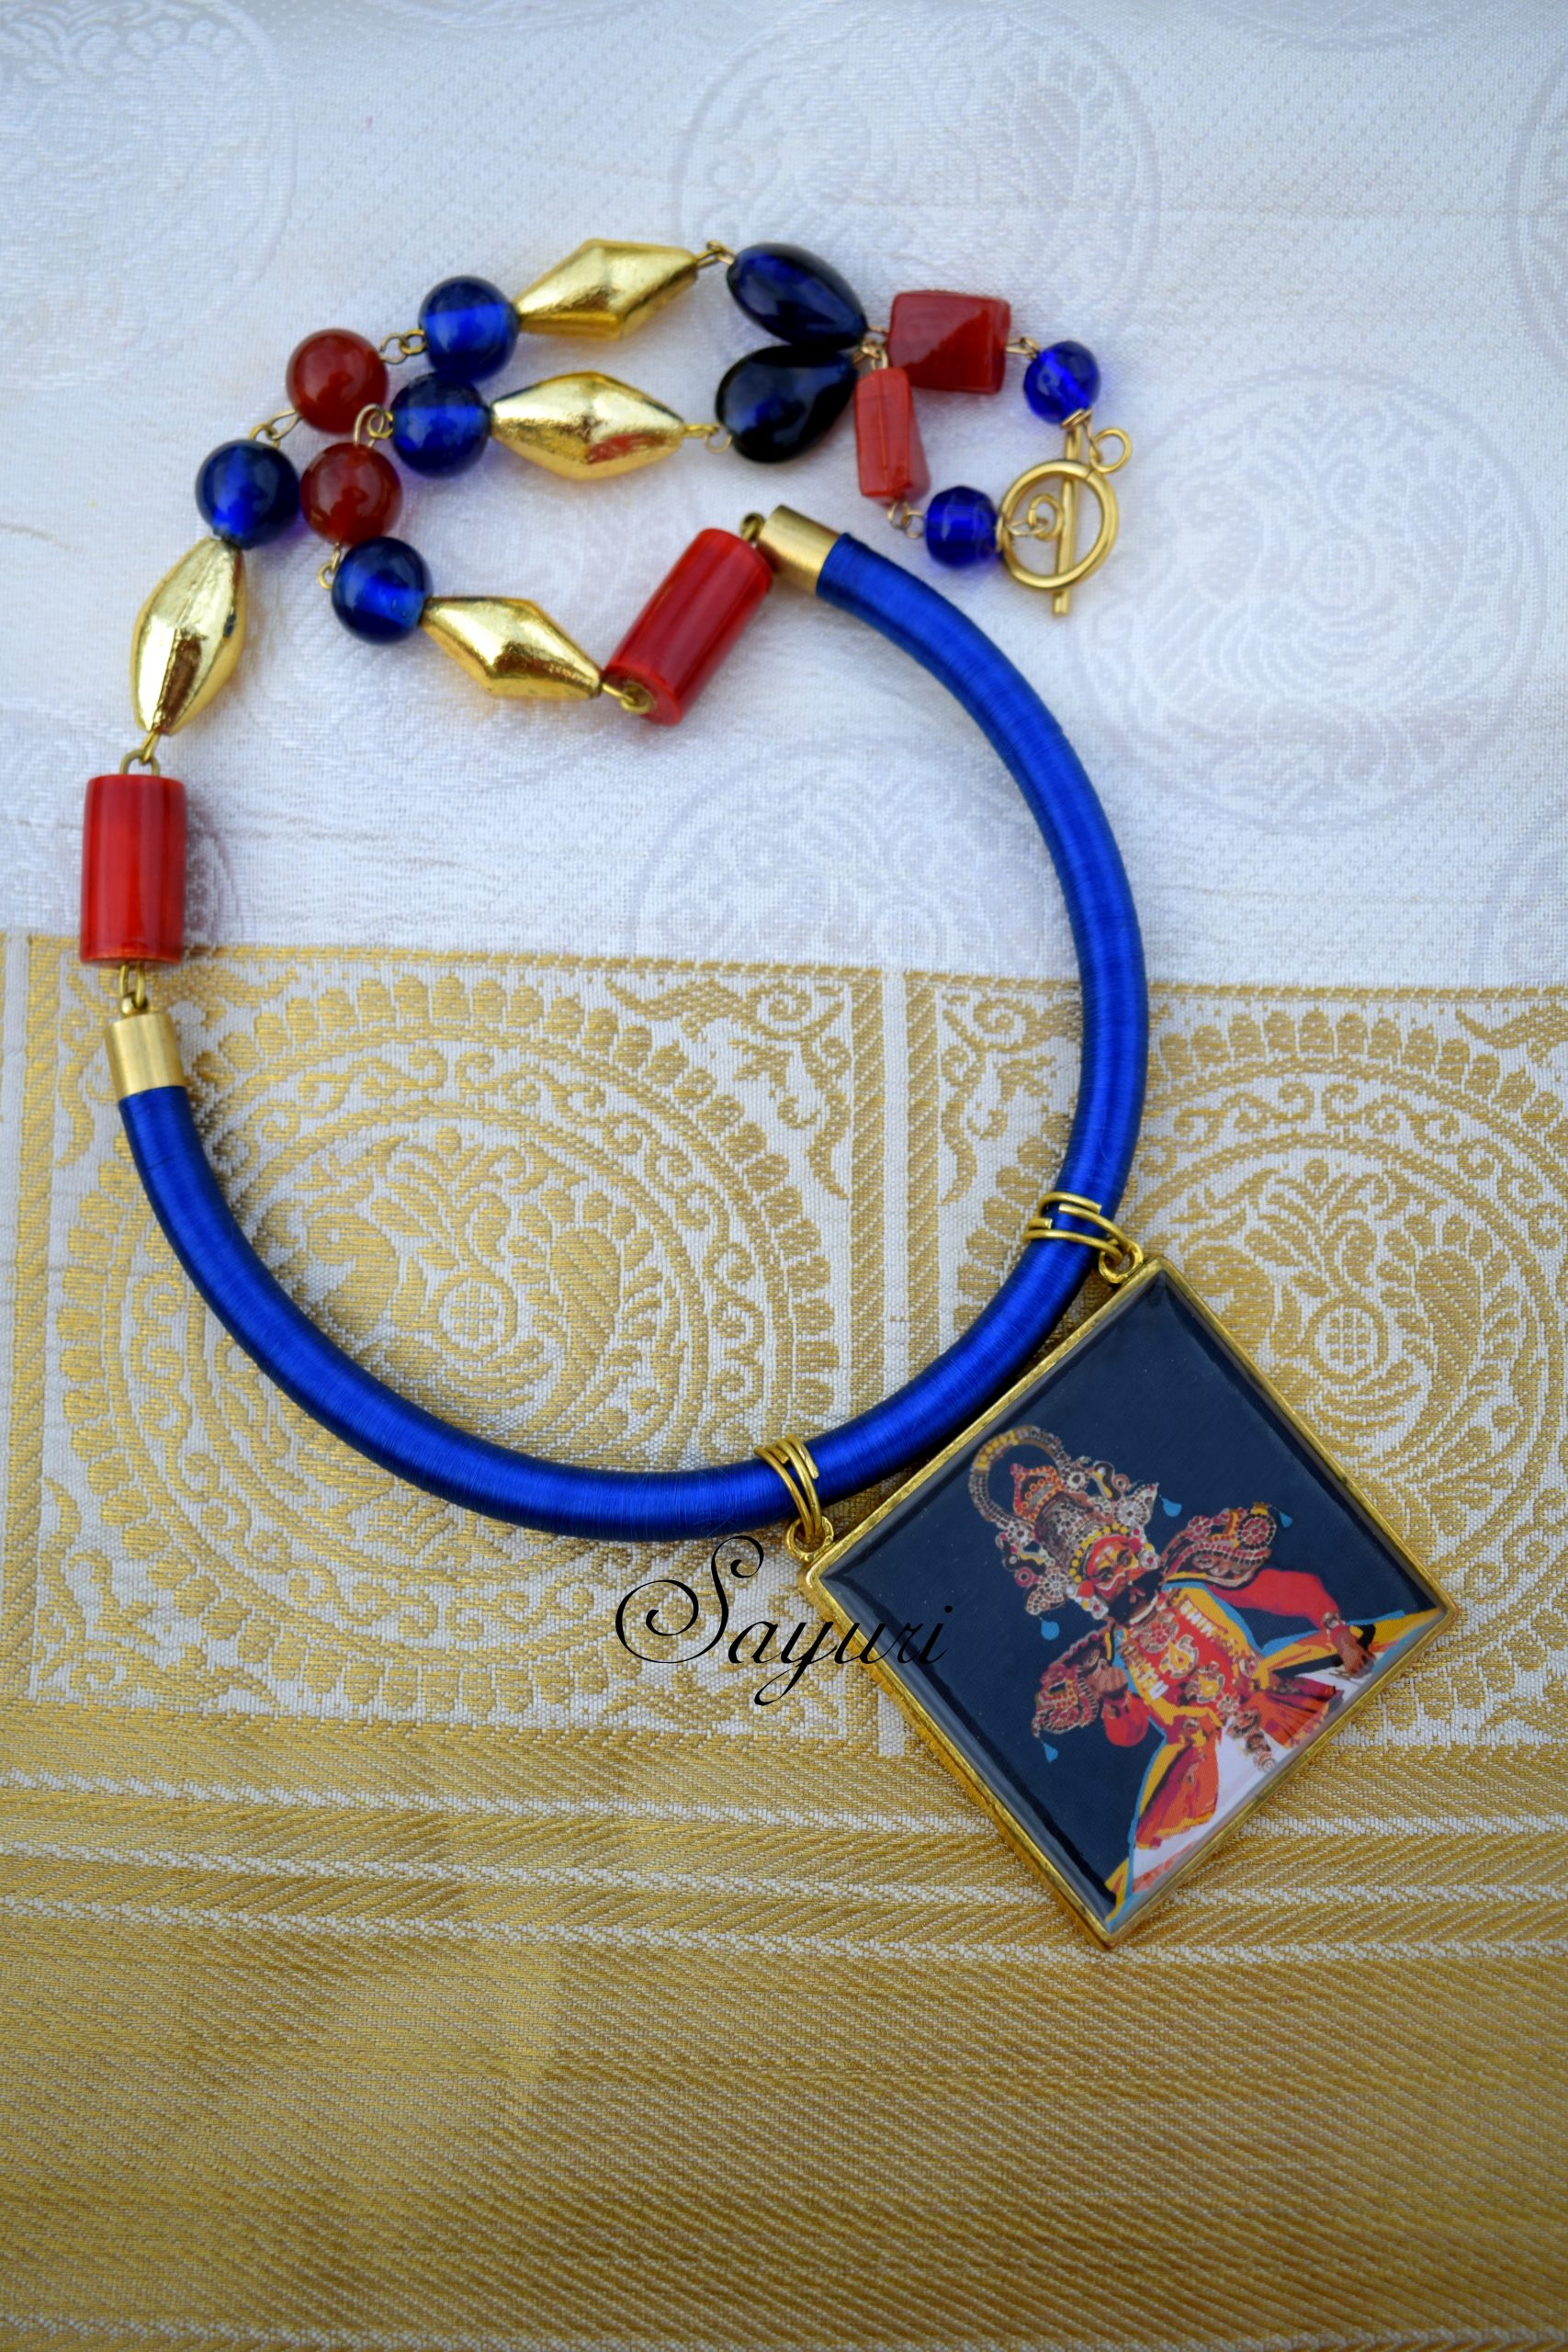 Therukoothu necklaces